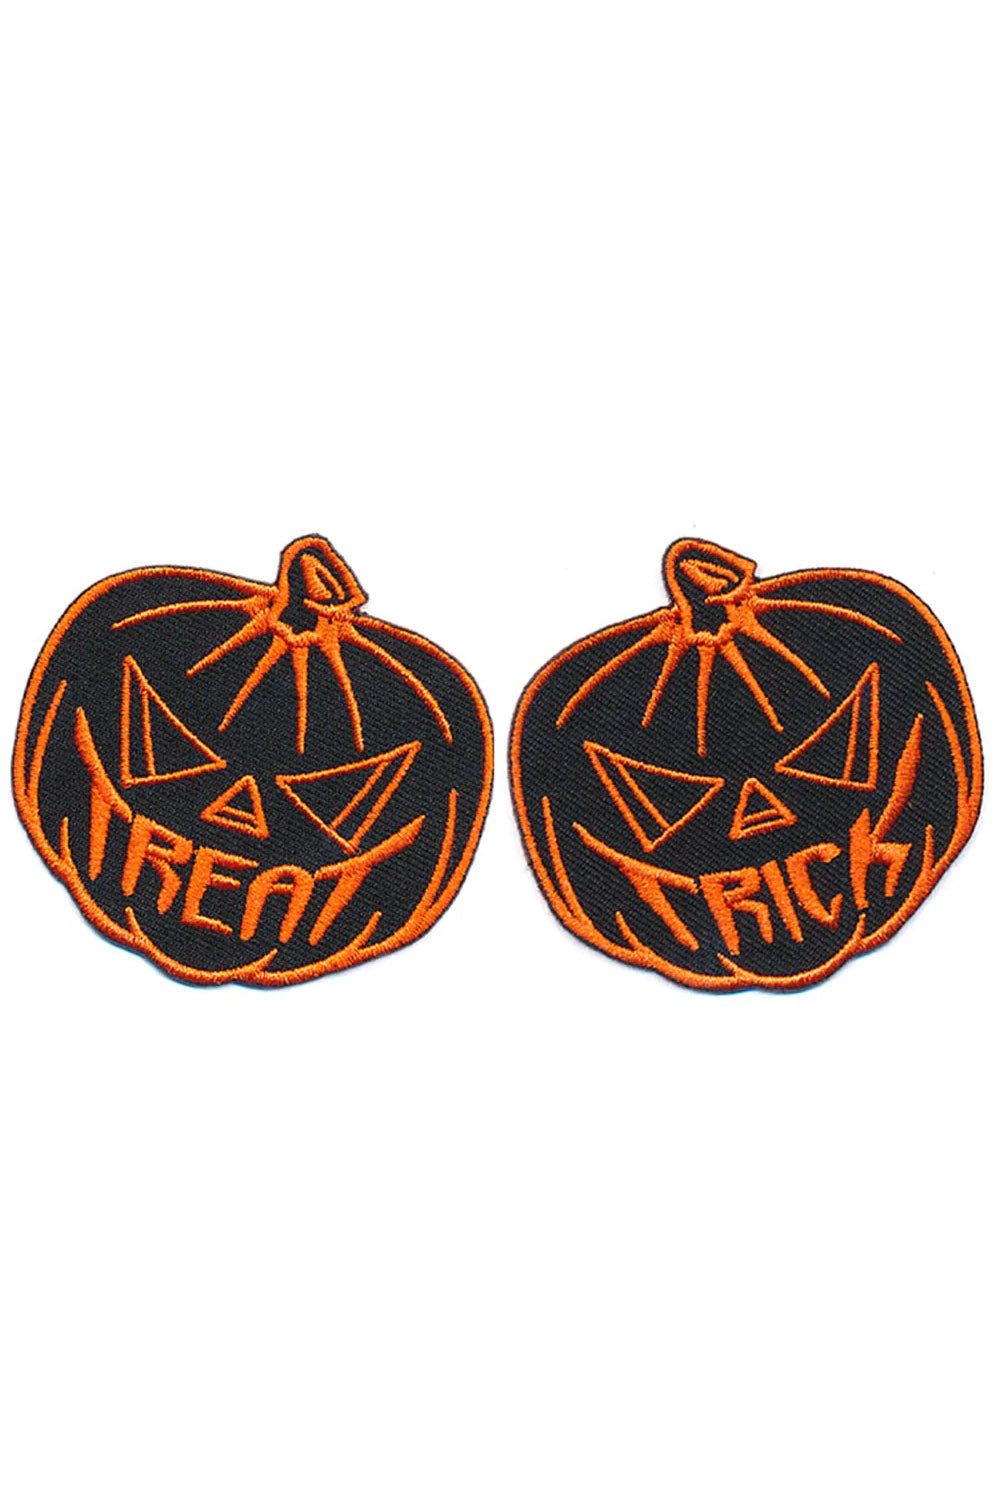 Trick Or Treat Pumpkin Patch Set